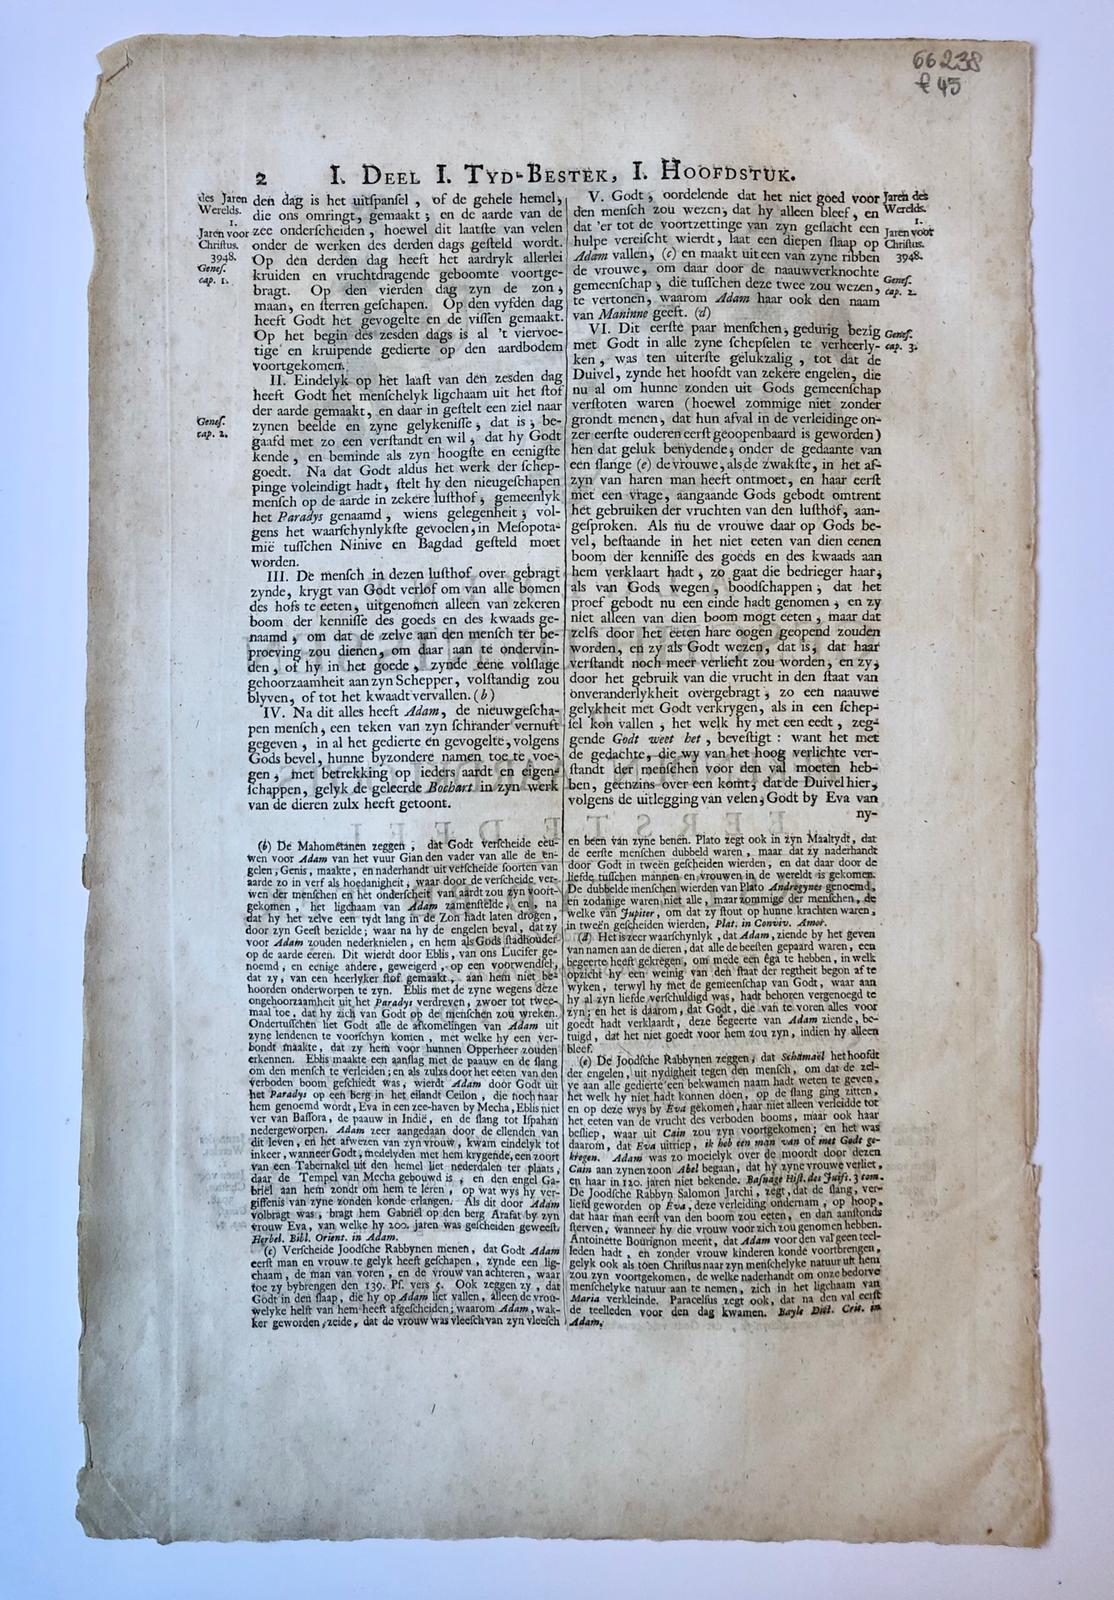 [Antique title page, 1720] Stories from the Book of Genesis [Algemene Geschiedenissen des bekende Aardkloots, vol. I], published 1720, 1 p.